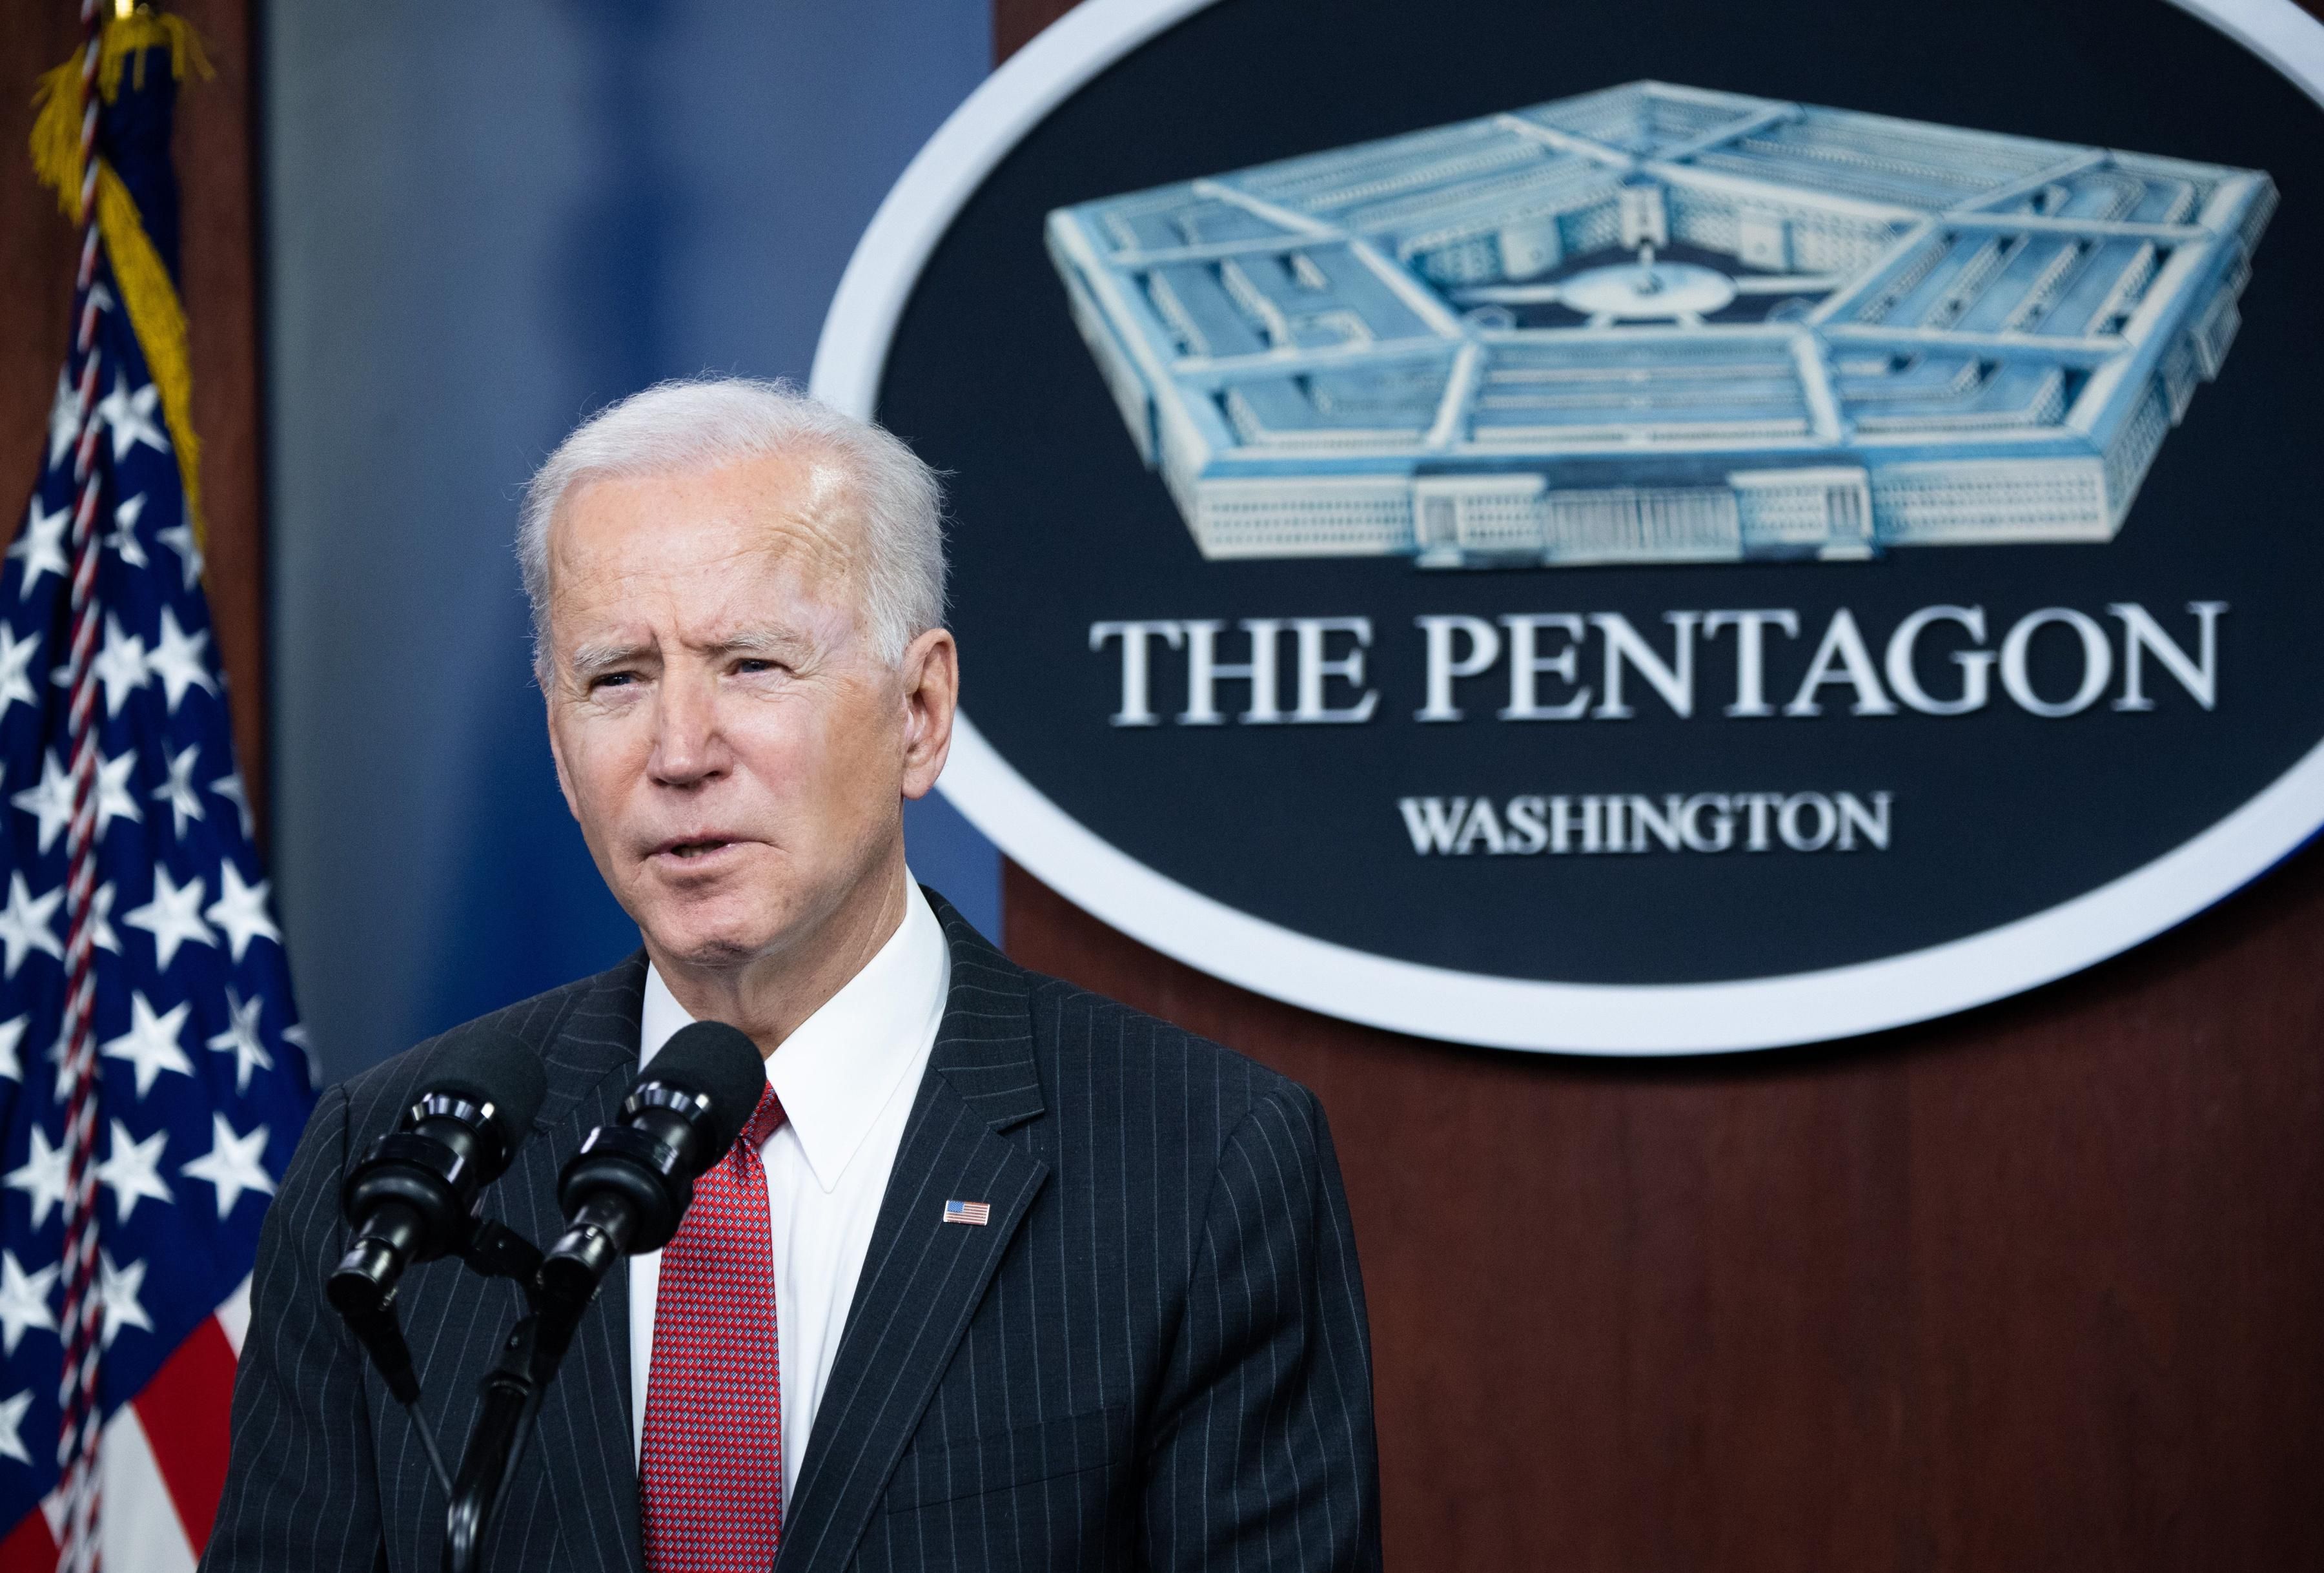 President Joe Biden speaks at the Pentagon